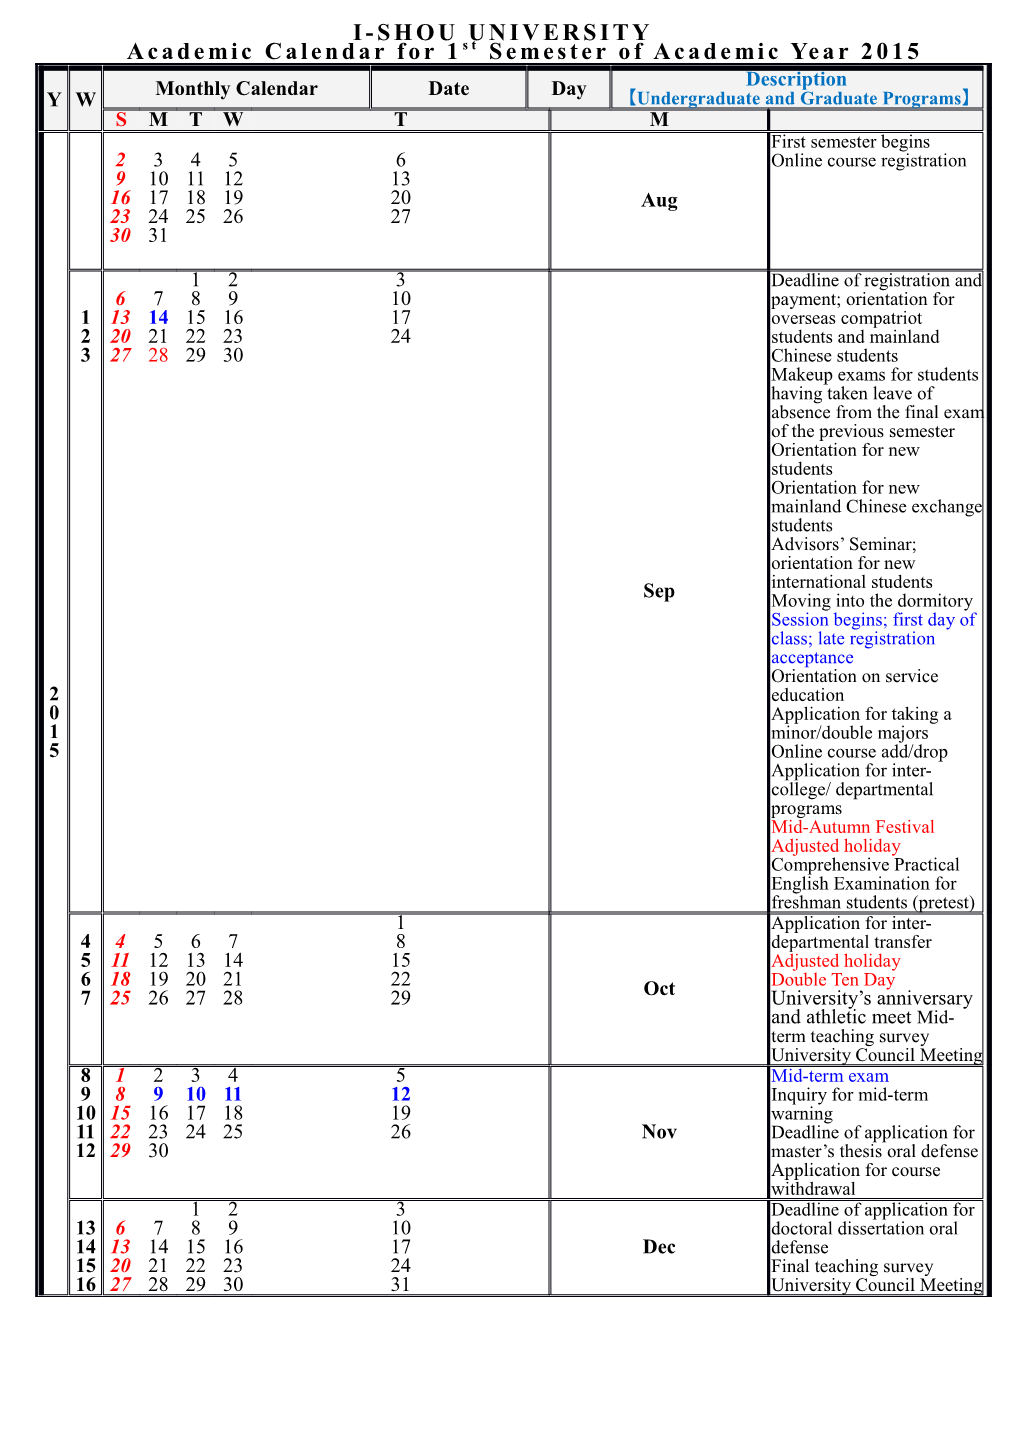 Academic Calendar for 1Stsemester of Academic Year 2015